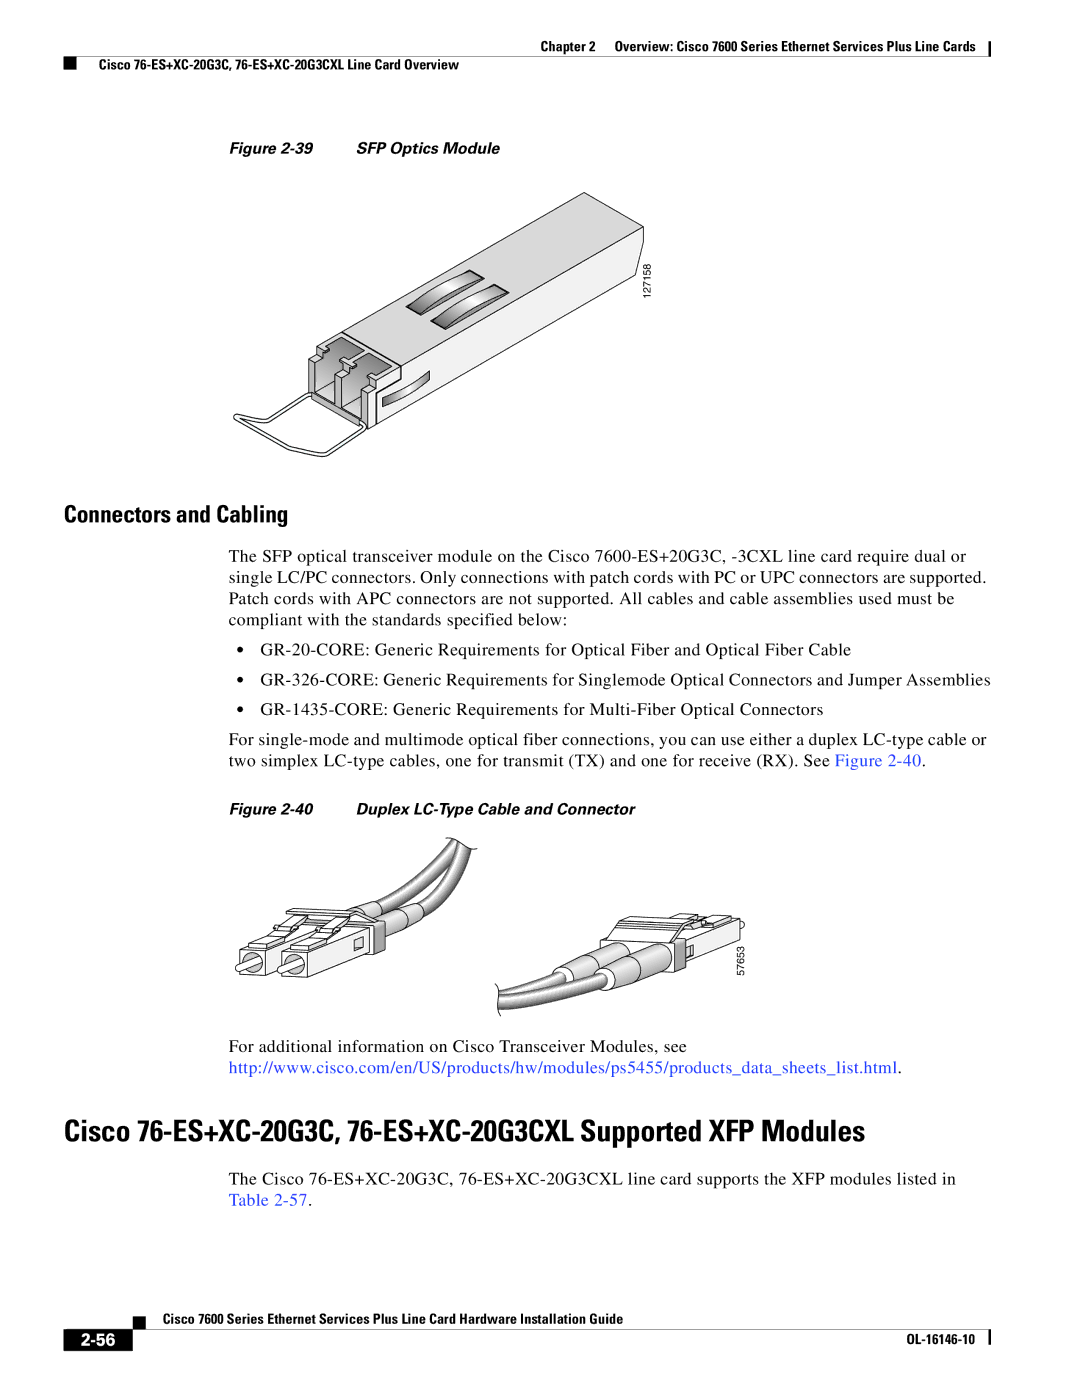 Cisco Systems OL-16146-10 manual Cisco 76-ES+XC-20G3C, 76-ES+XC-20G3CXL Supported XFP Modules 